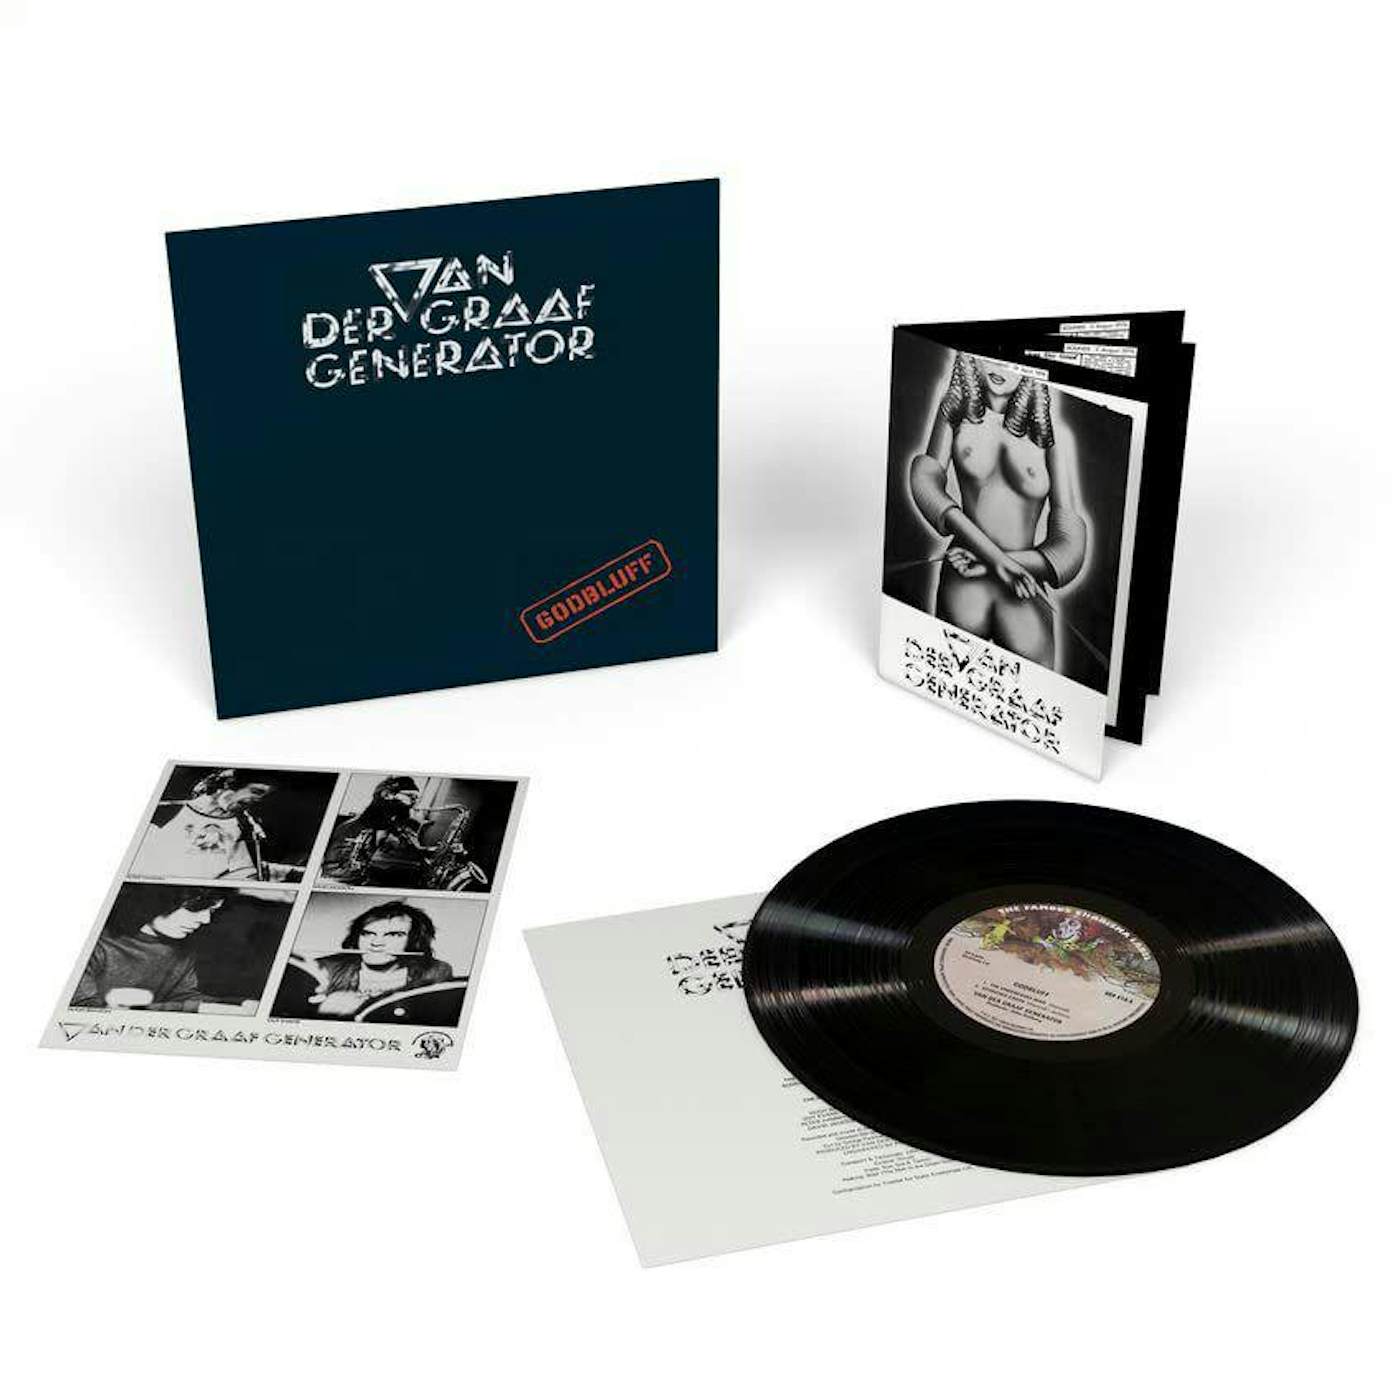 Van Der Graaf Generator Godbluff Vinyl Record